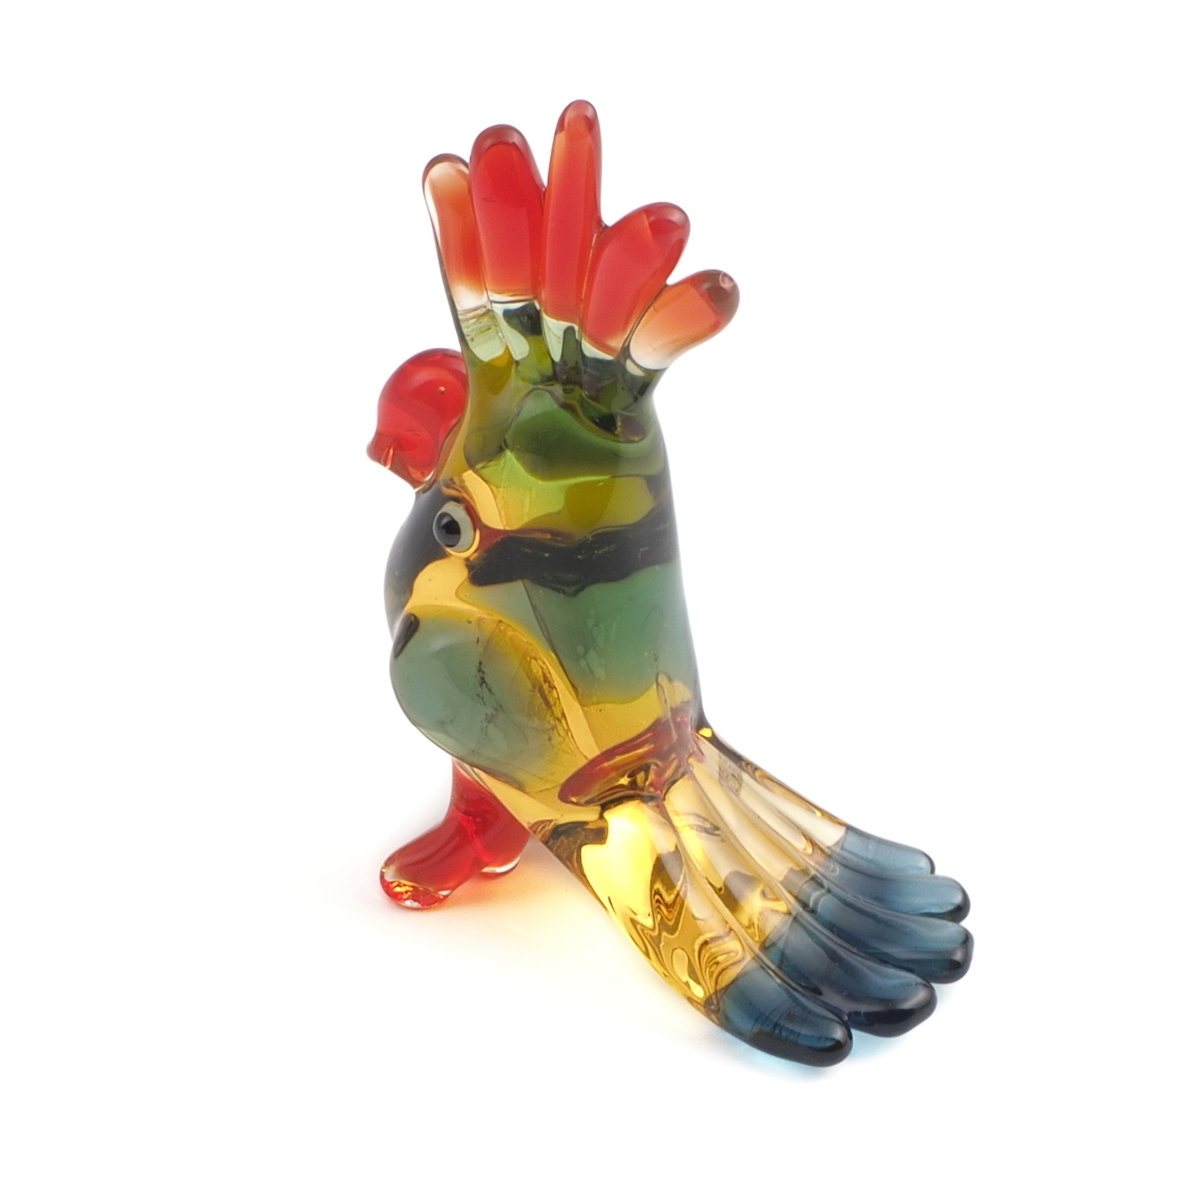 Czech hand lampwork glass tropical parrot cockatoo figurine ornament gift